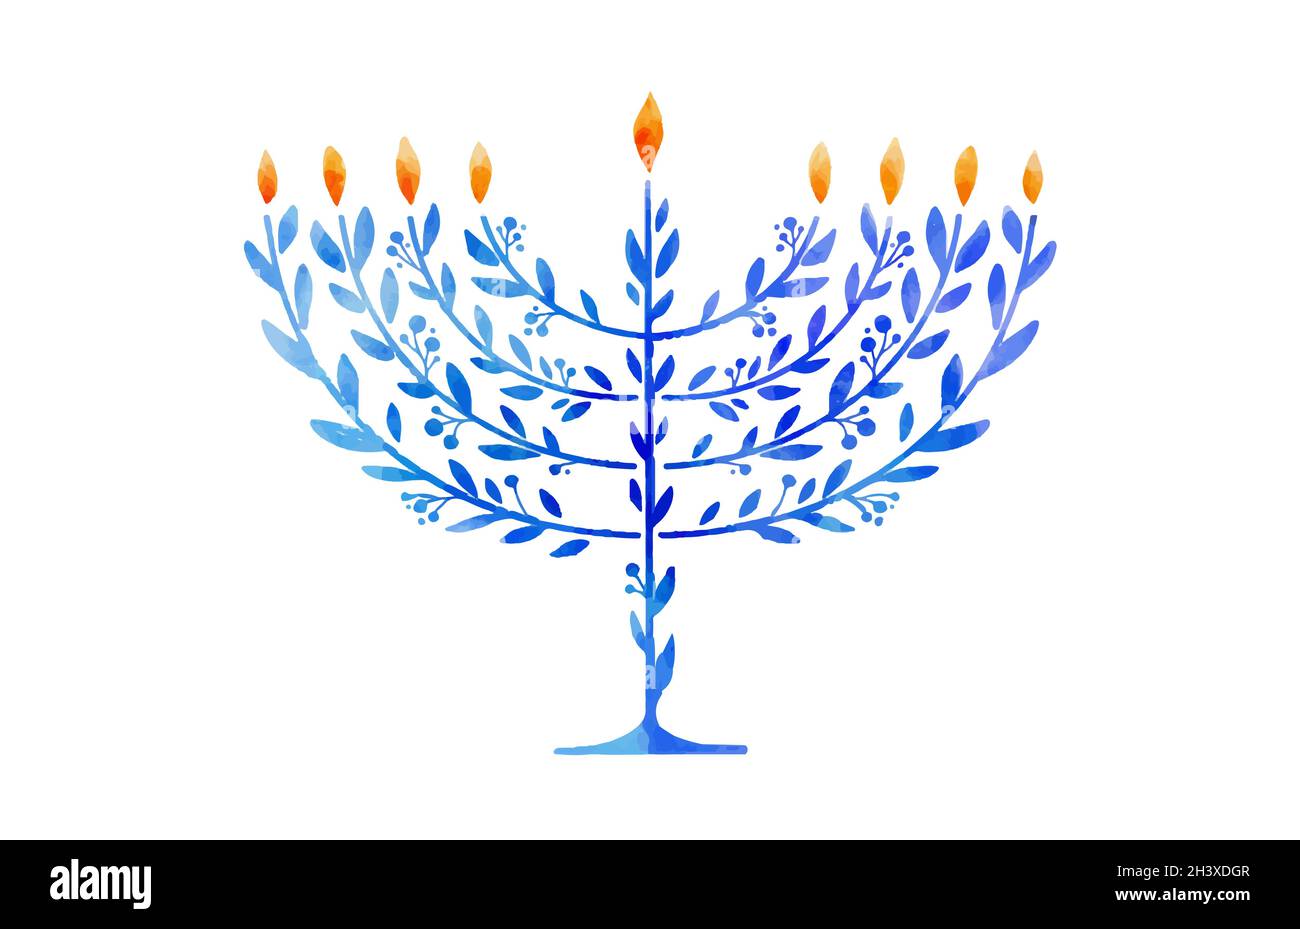 Happy Hanukkah, Vektor-Aquarell-Illustration, Banner-Design. Traditionelle jüdische Feiertagsgrußkarte mit Menora und Dreidels Stock Vektor